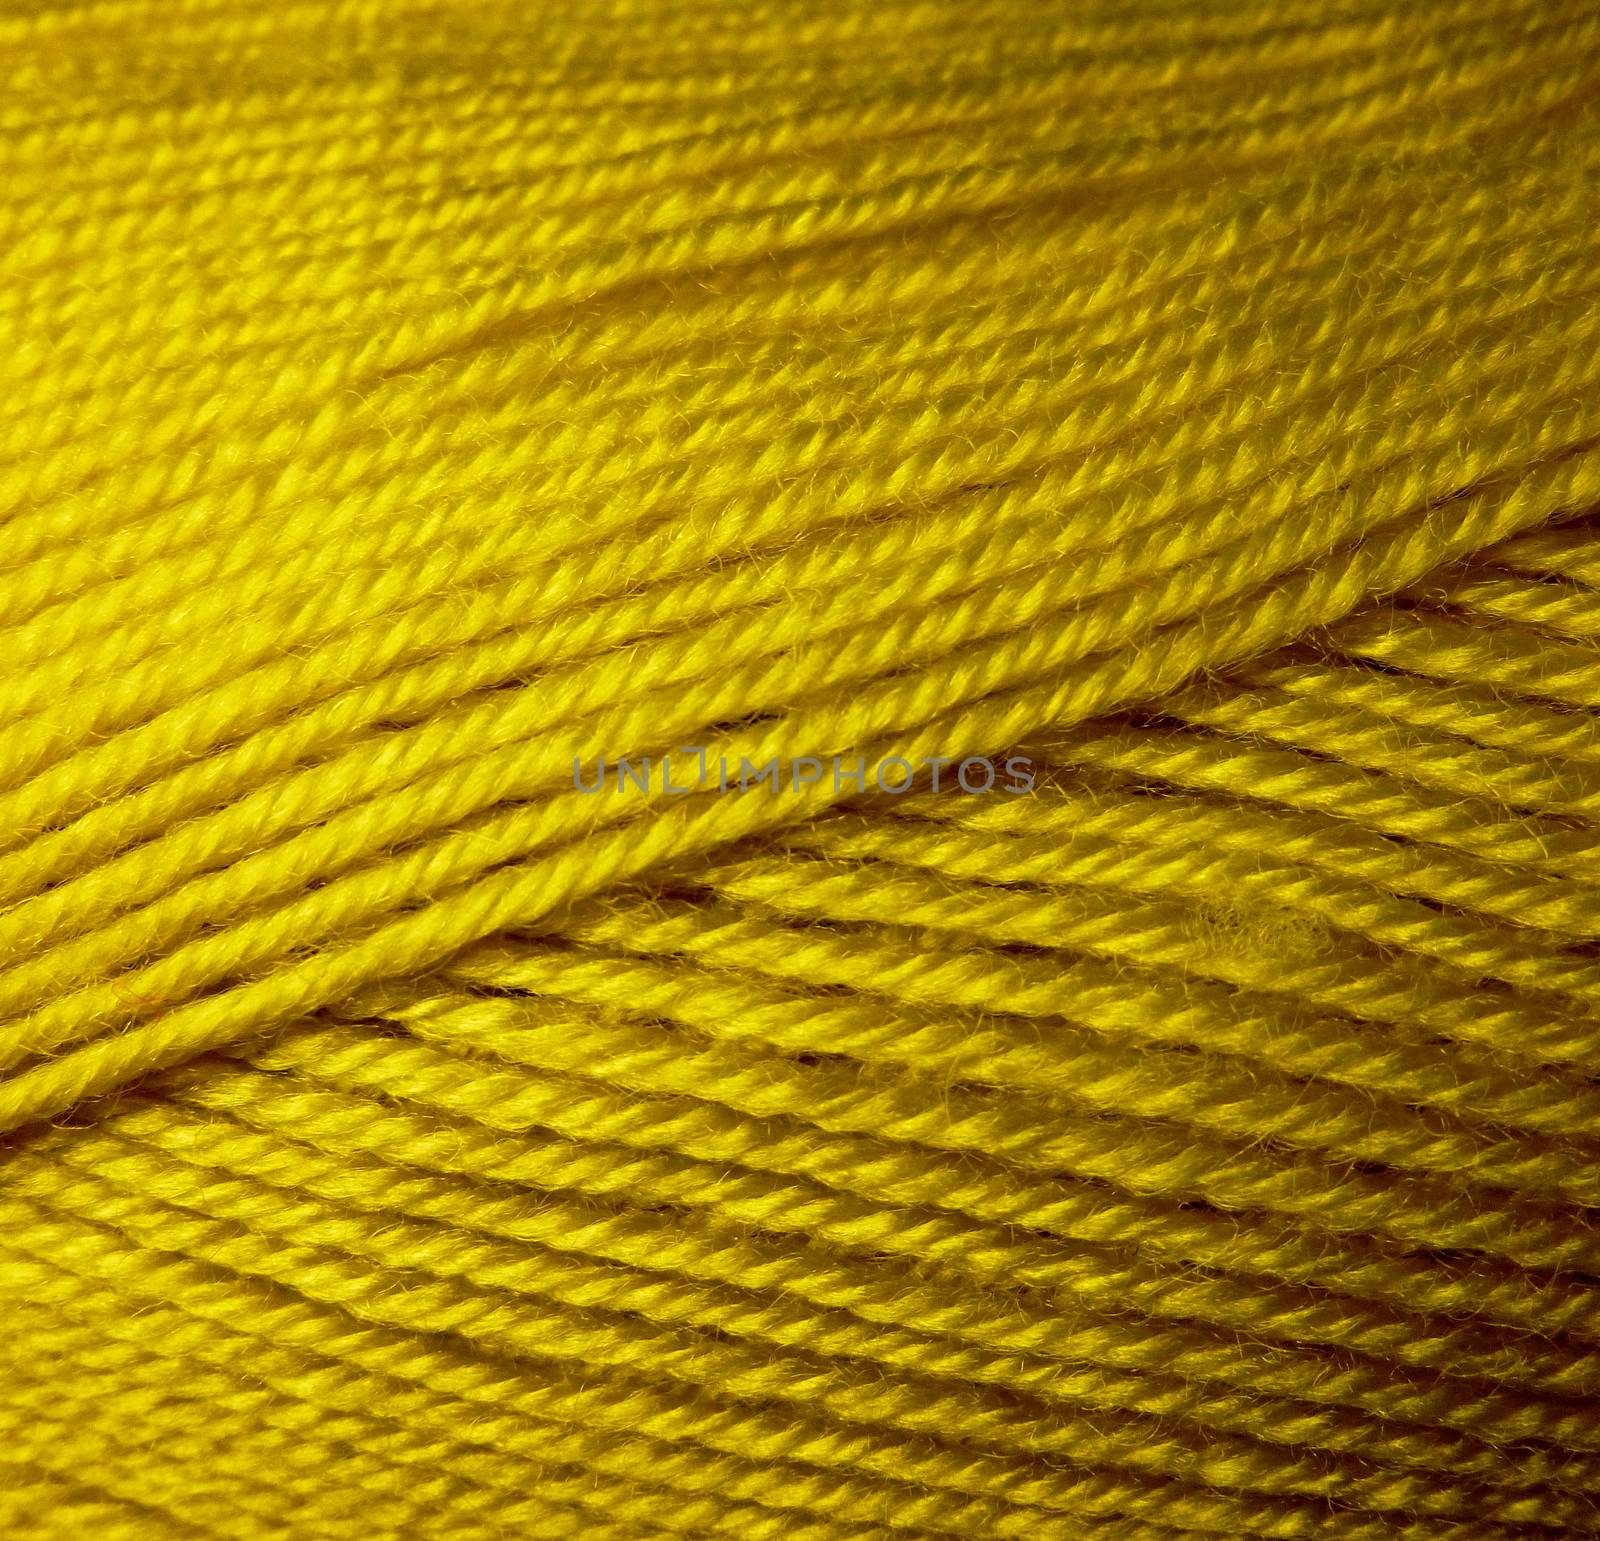 Skein of wool yarn. Macro shooting. Texture of wavy thread. Yellow green threads. Background image. Hobbies leisure crafts